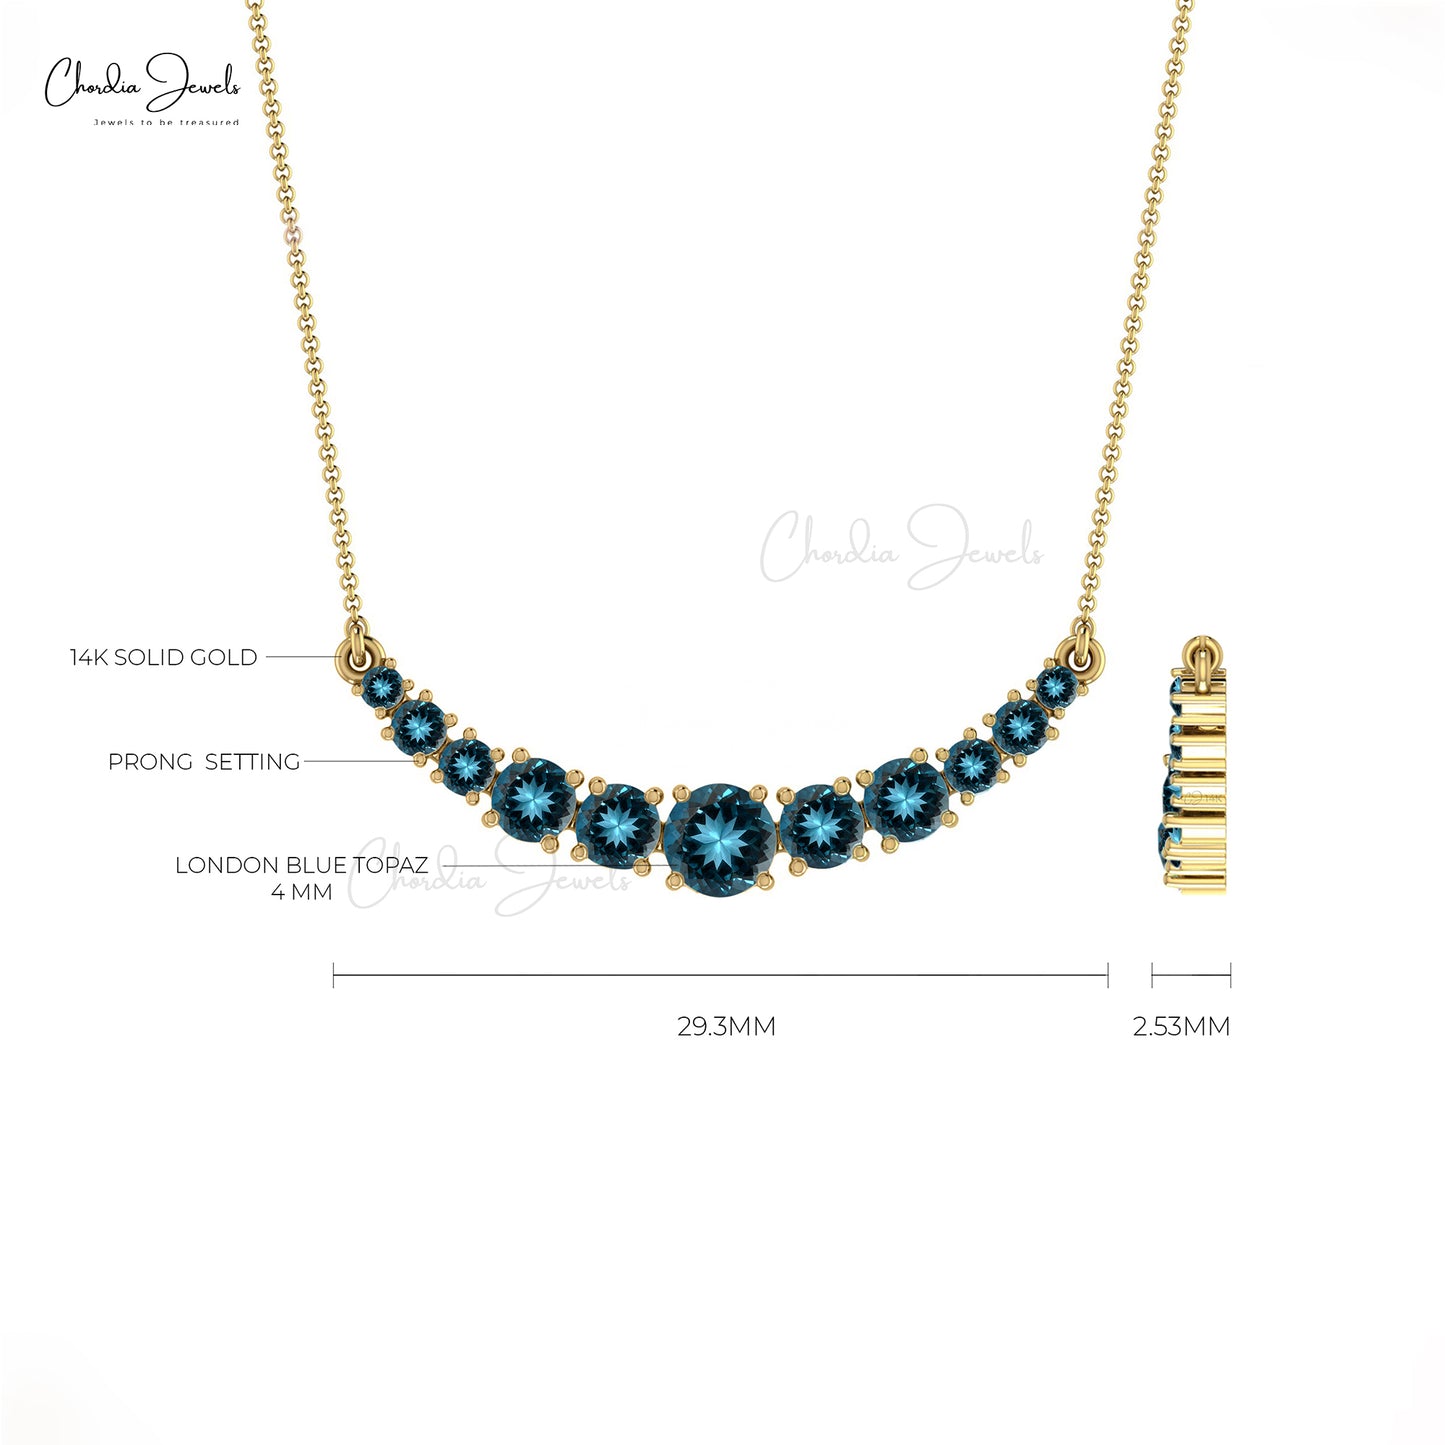 Natural London Blue Topaz Necklace, December Birthstone Necklace, 1.19 Carat Round Faceted Gemstone Necklace, Wedding Gift for Her